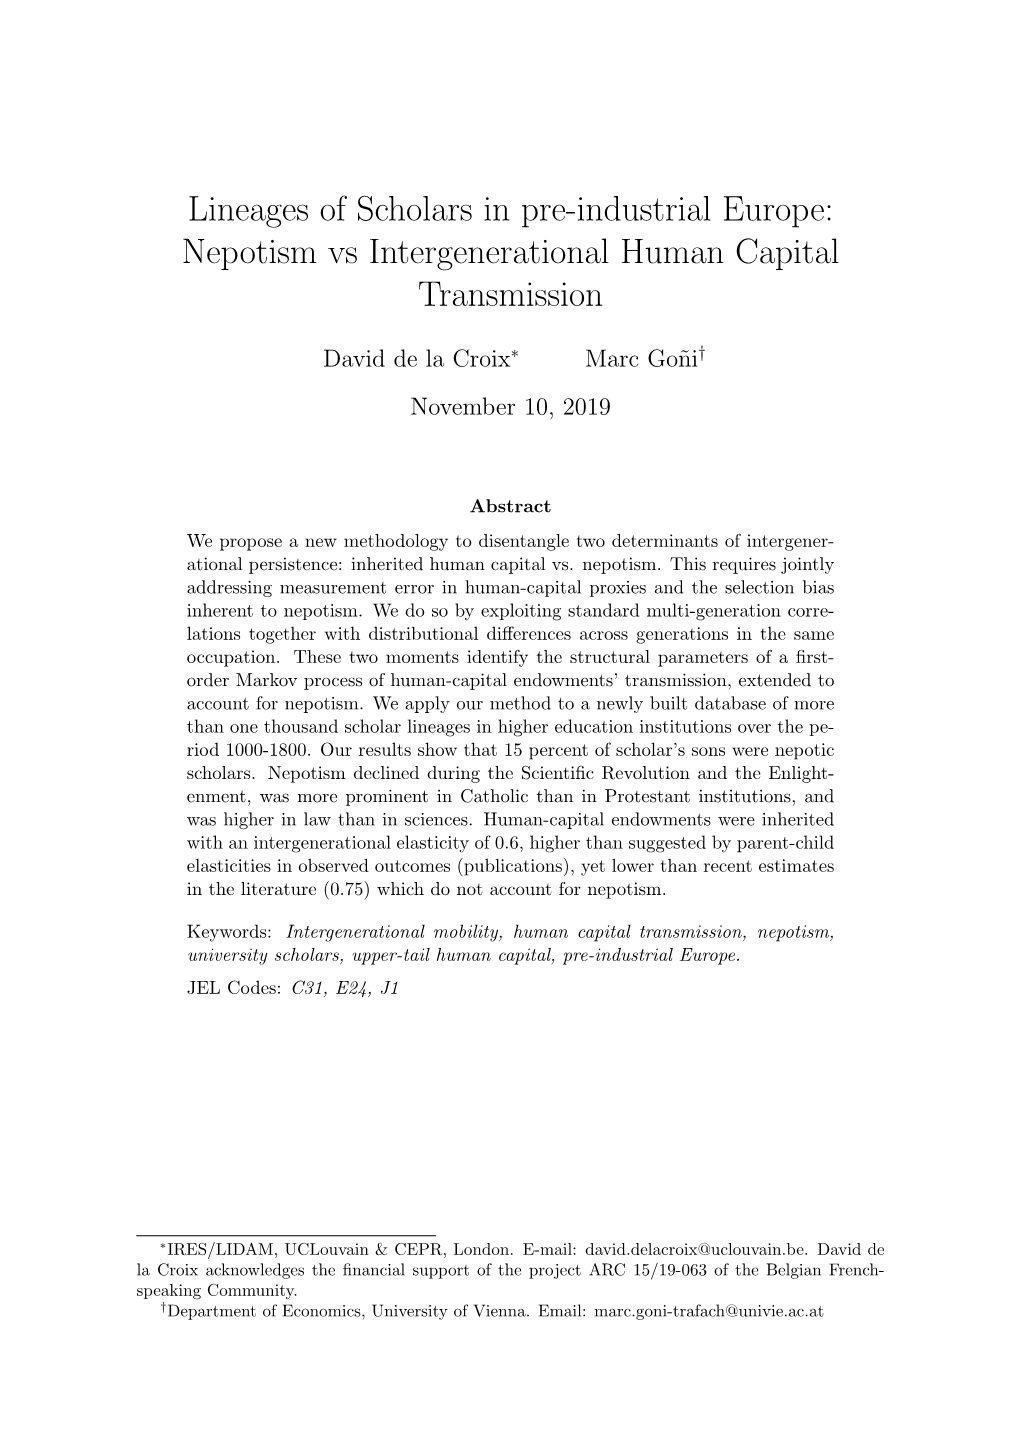 Nepotism Vs Intergenerational Human Capital Transmission